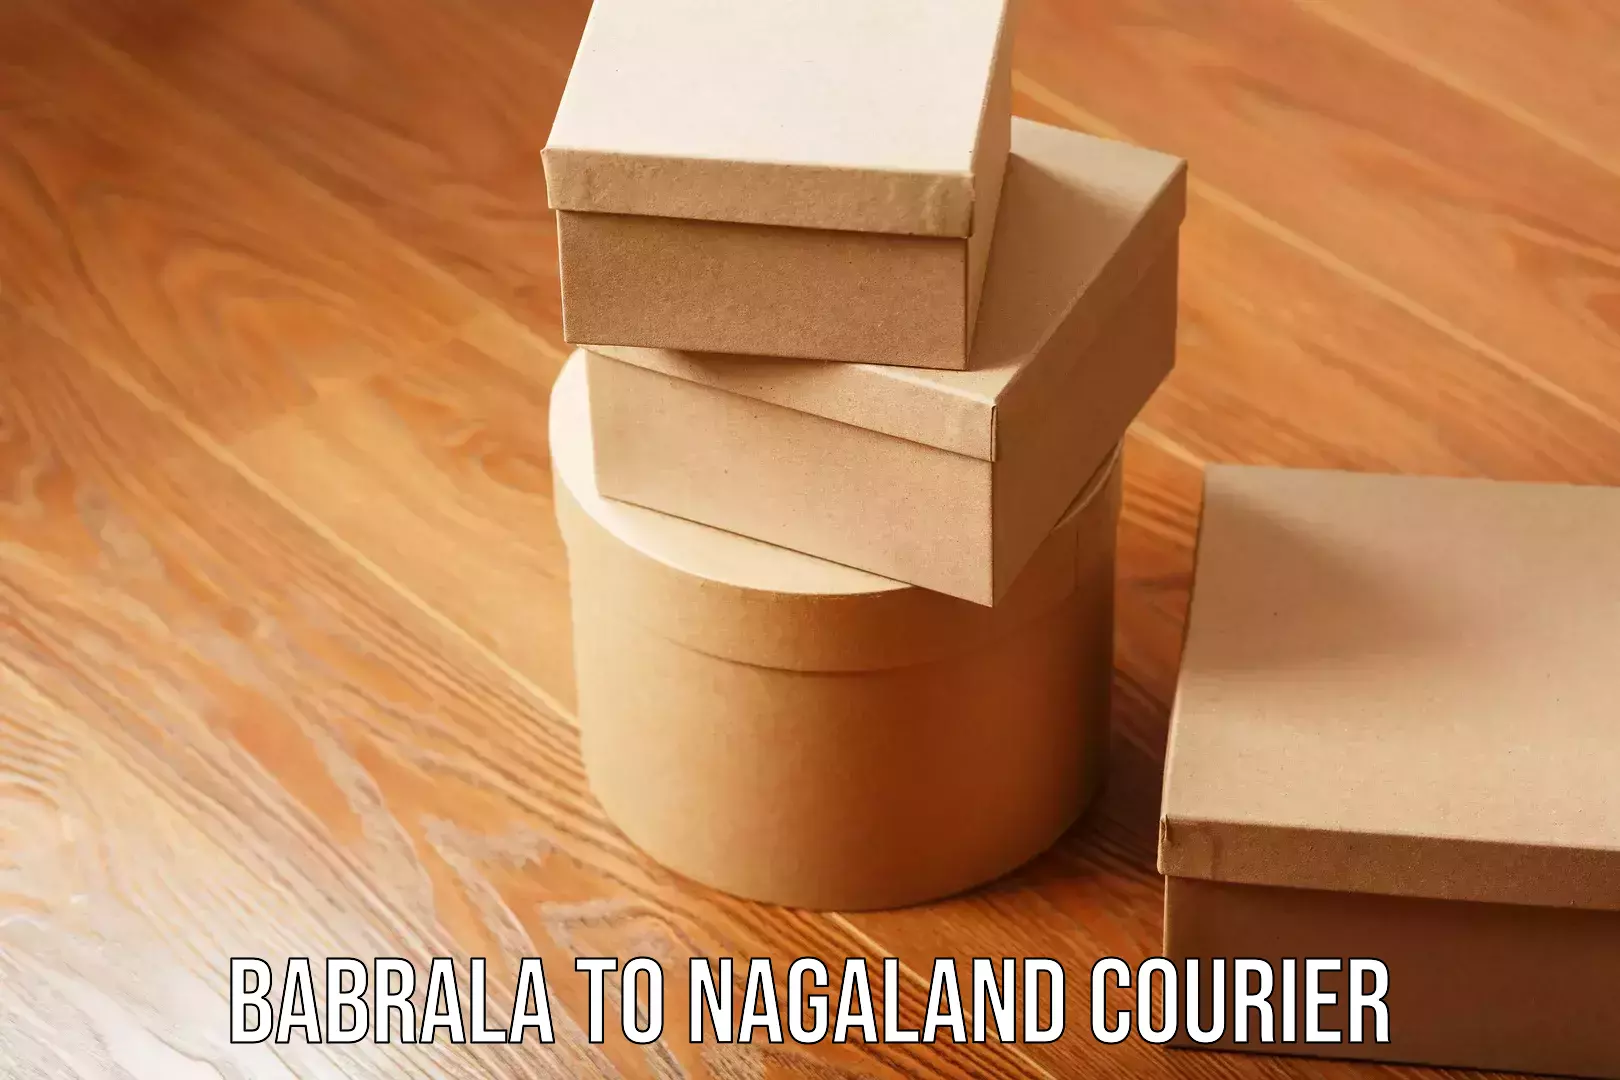 Efficient freight service Babrala to Nagaland